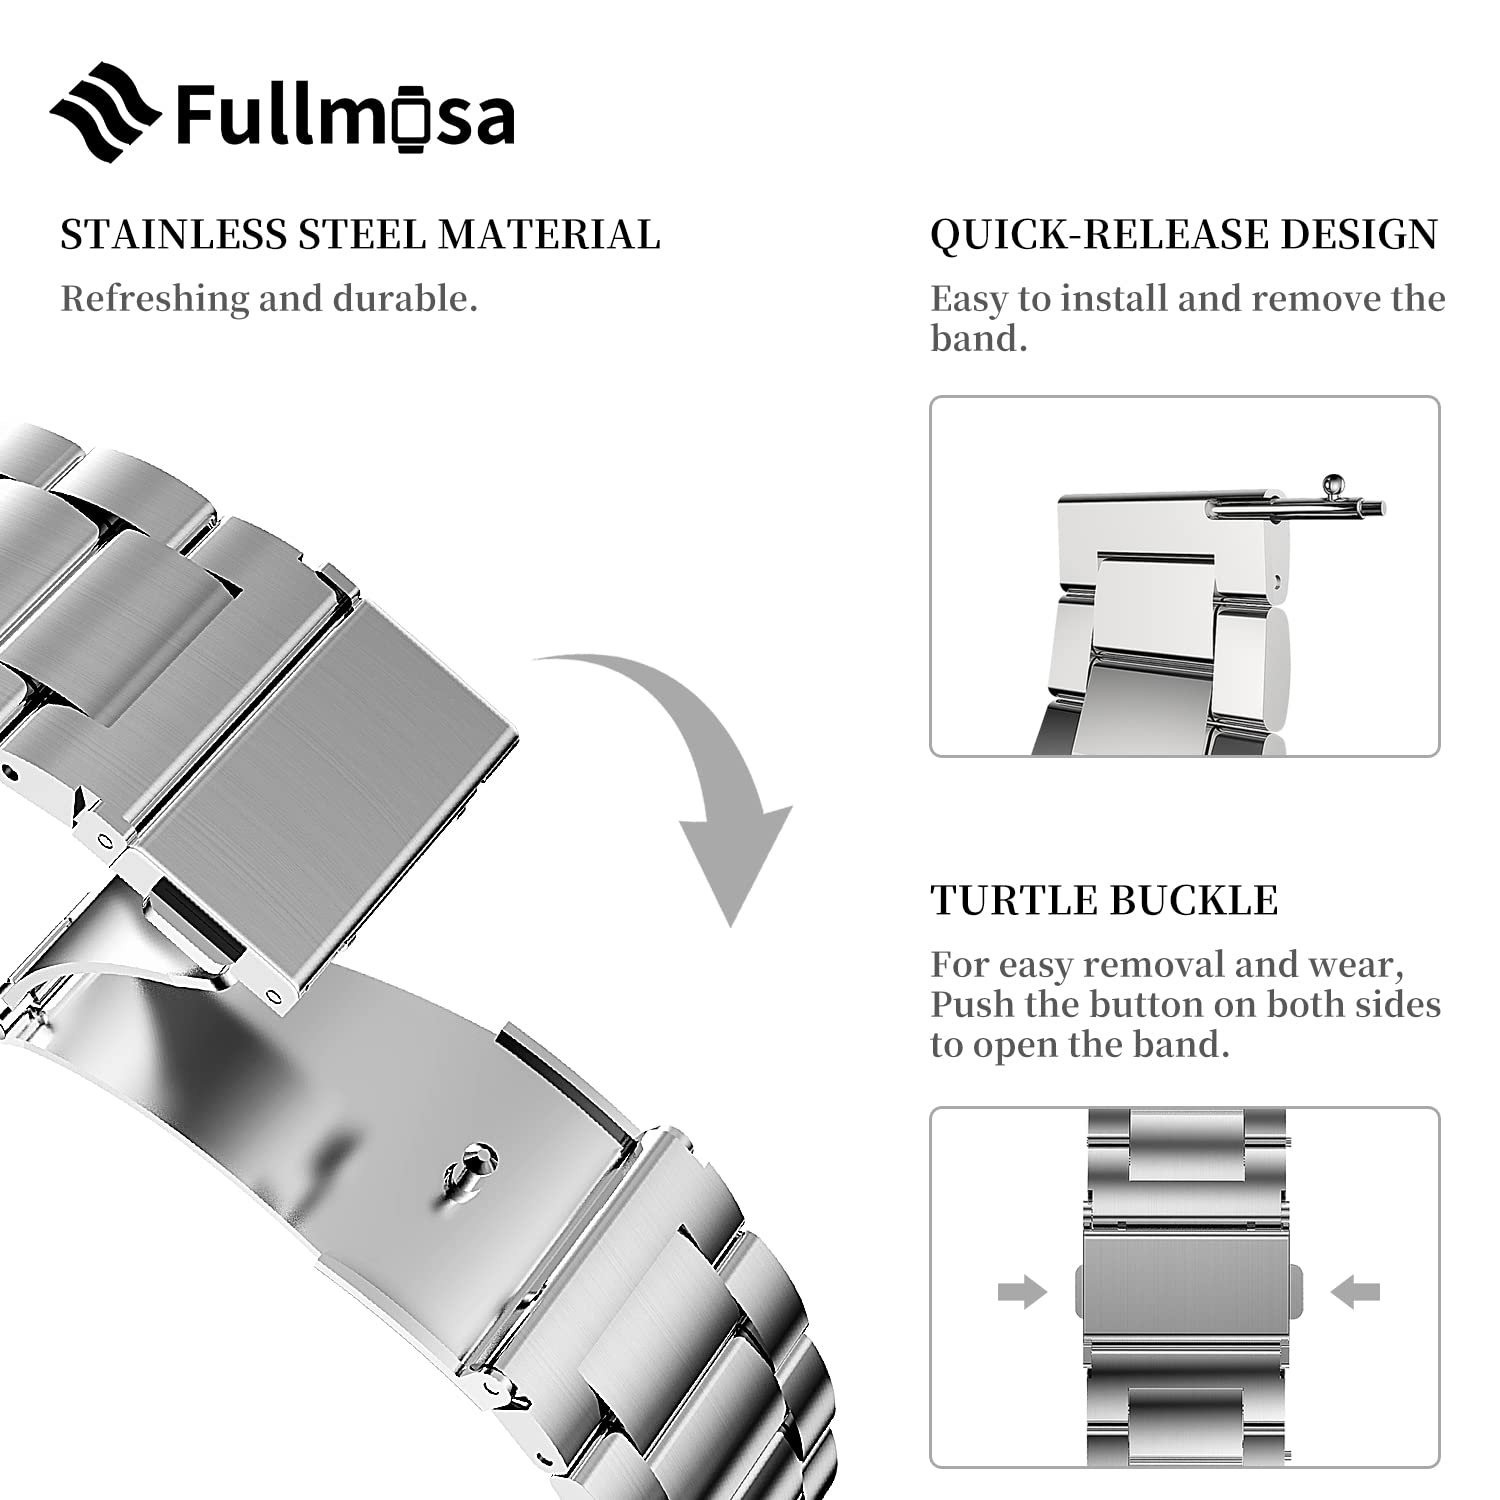 Fullmosa Quick Release Watch band, Stainless Steel Watch strap 16mm, 18mm, 19mm, 20mm, 22mm or 24mm, Fits Samsung Galaxy Watch 6/5/4/3,Garmin Watch,Huawei Watch for Men Women